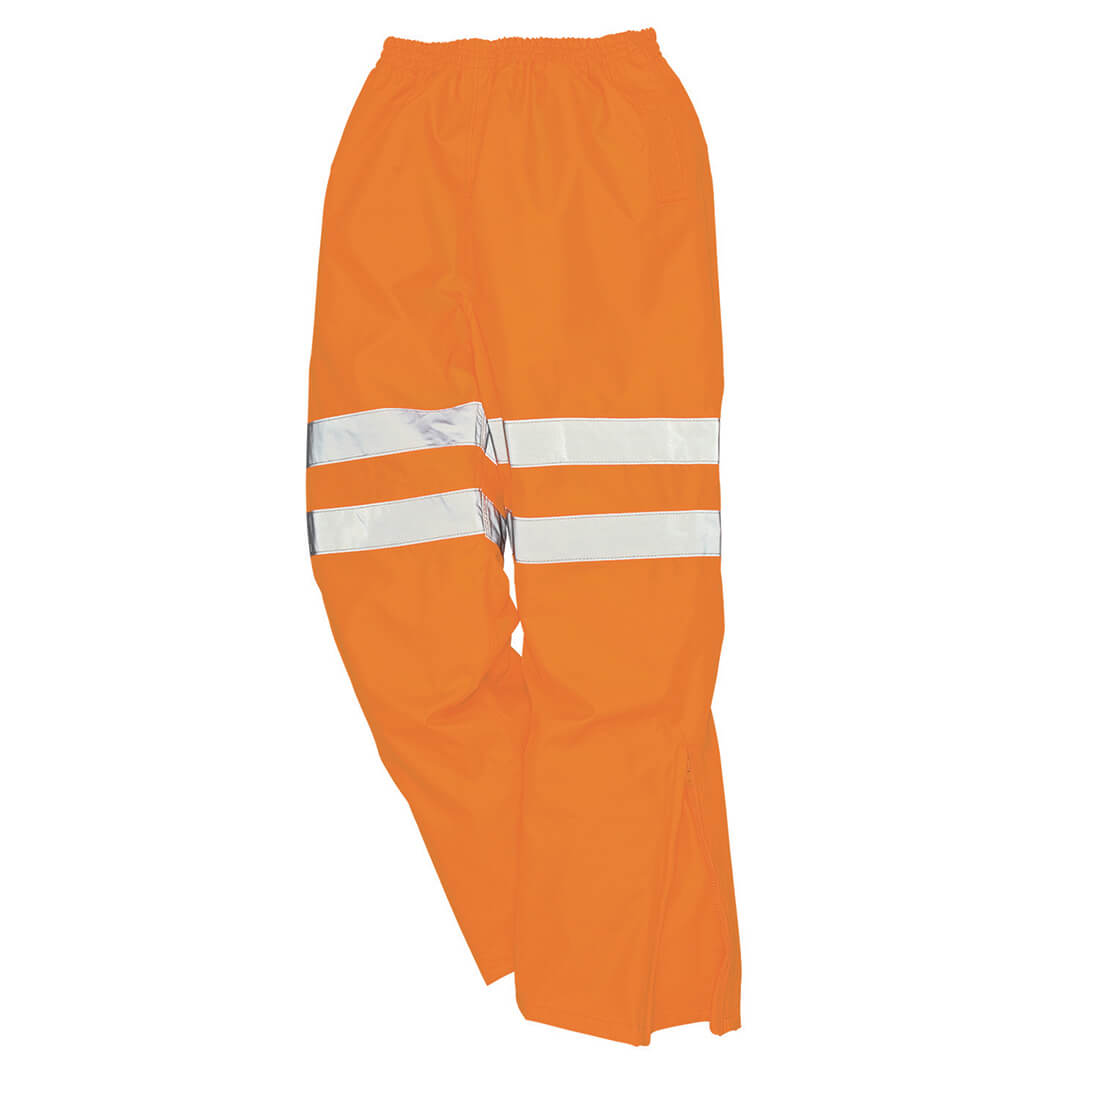 Image of Oxford Weave 300D Class 2 Breathable Hi Vis Breathable Trousers Orange 5XL